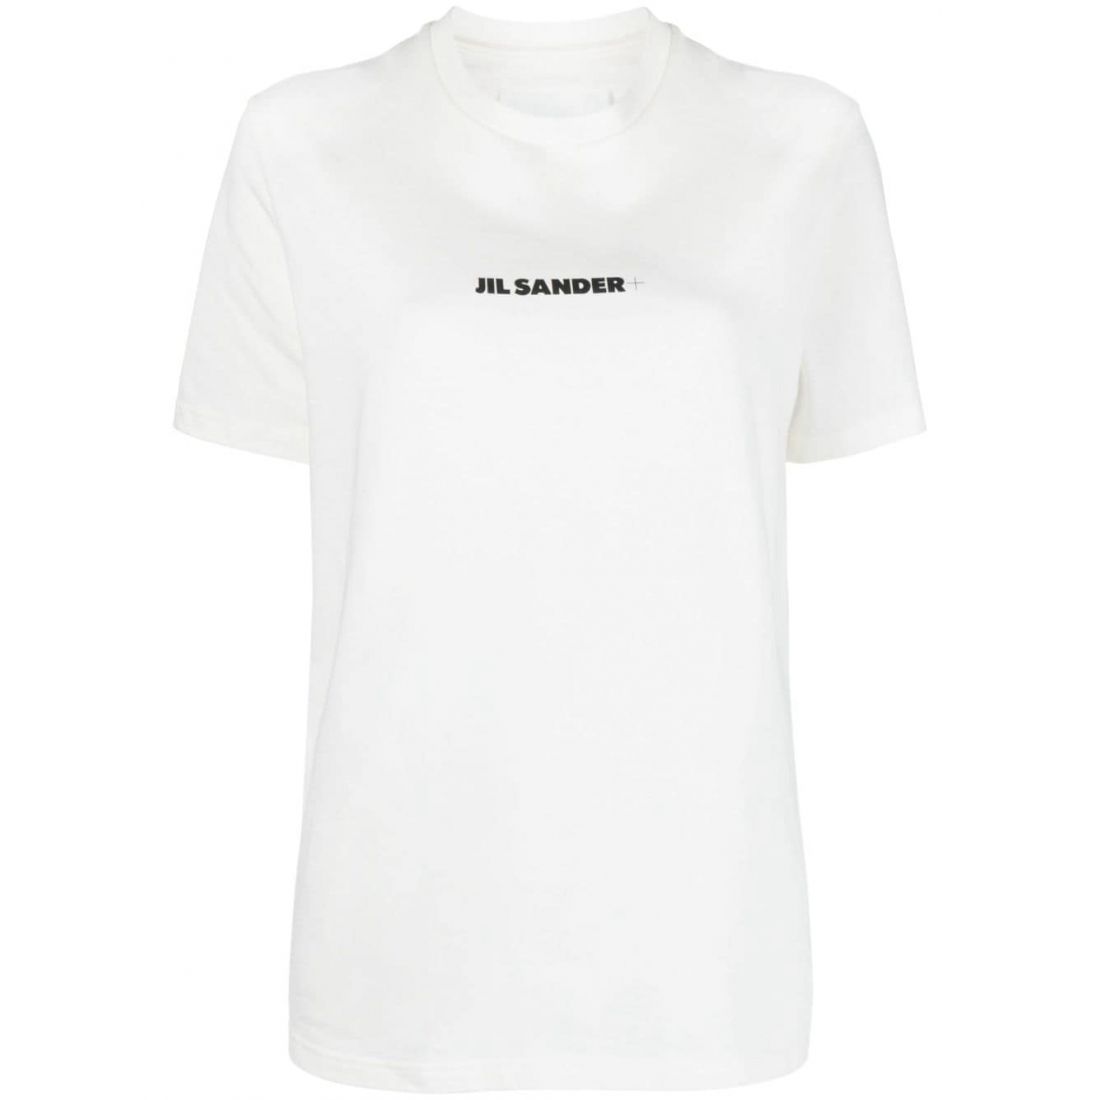 Jil Sander - T-shirt 'Logo' pour Femmes